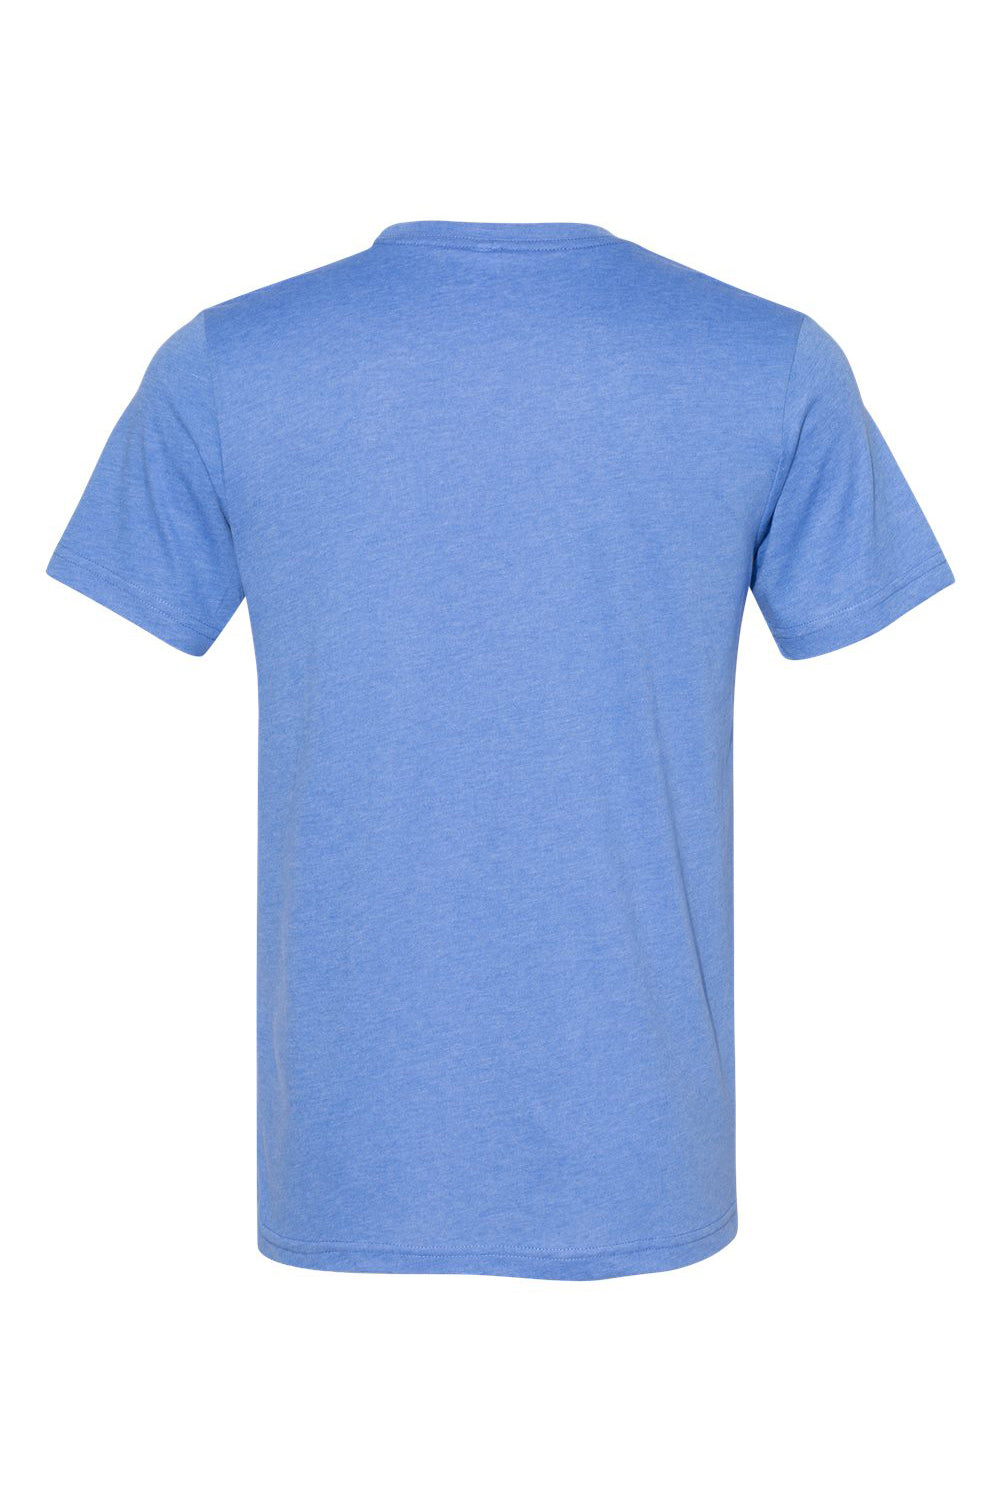 Bella + Canvas BC3301/3301C/3301 Mens Jersey Short Sleeve Crewneck T-Shirt Heather Columbia Blue Flat Back